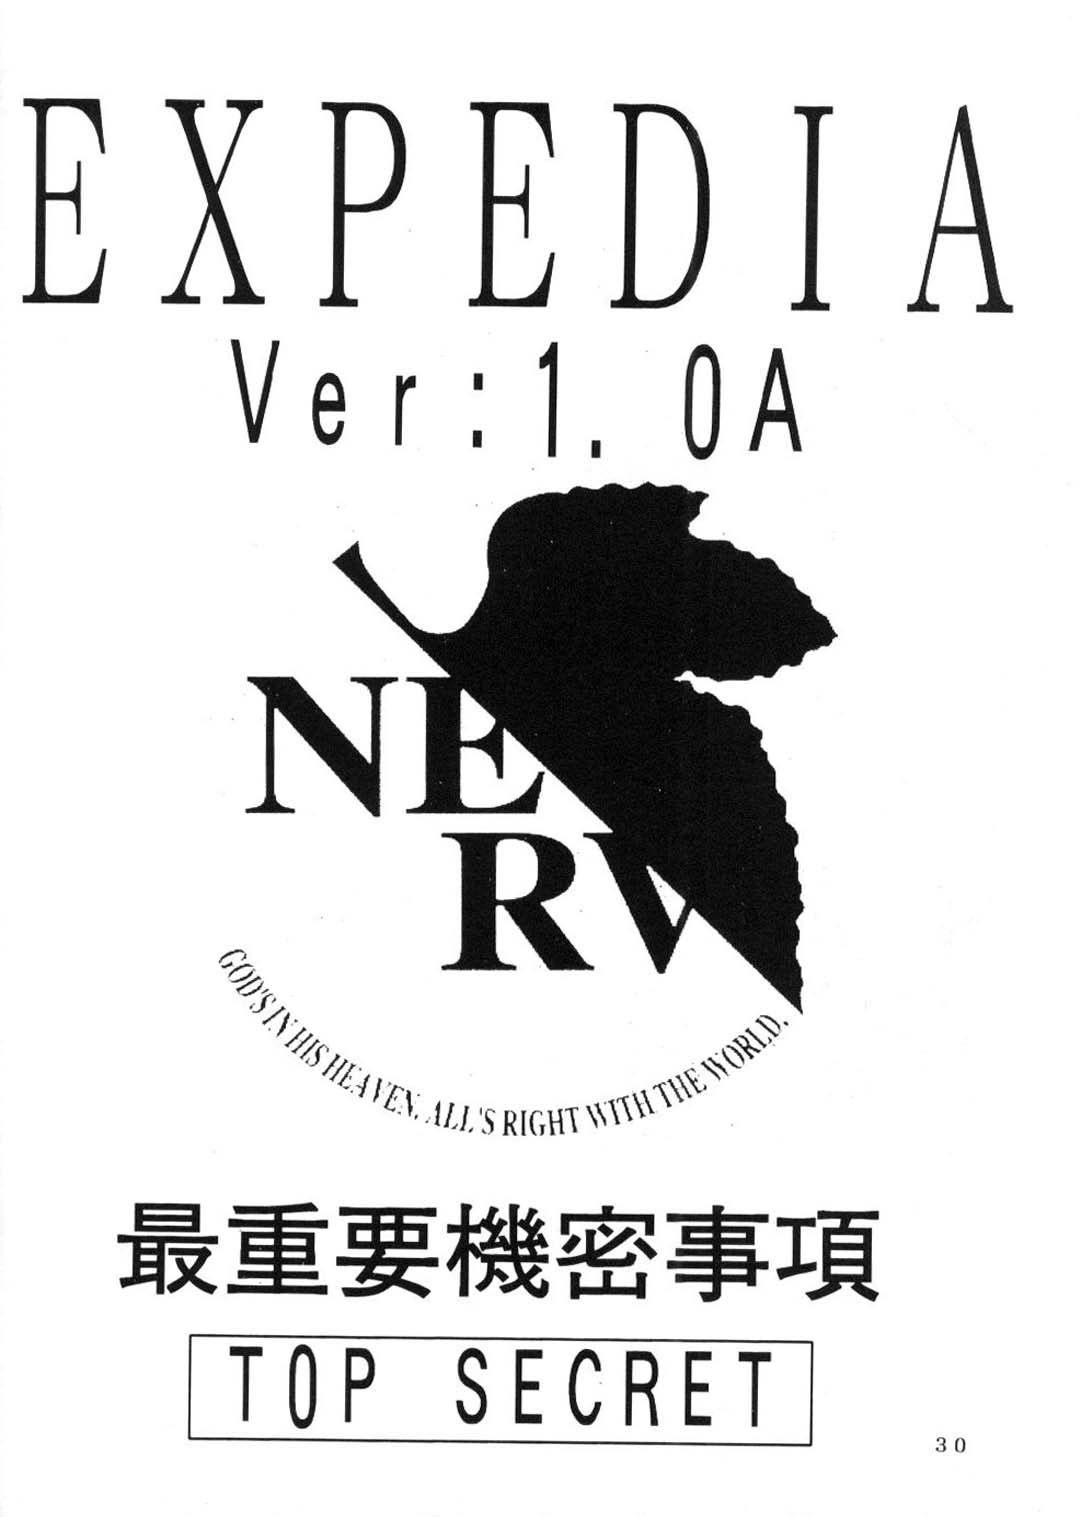 [Expedia] Expedia Ver 1.0A (Evangelion) 